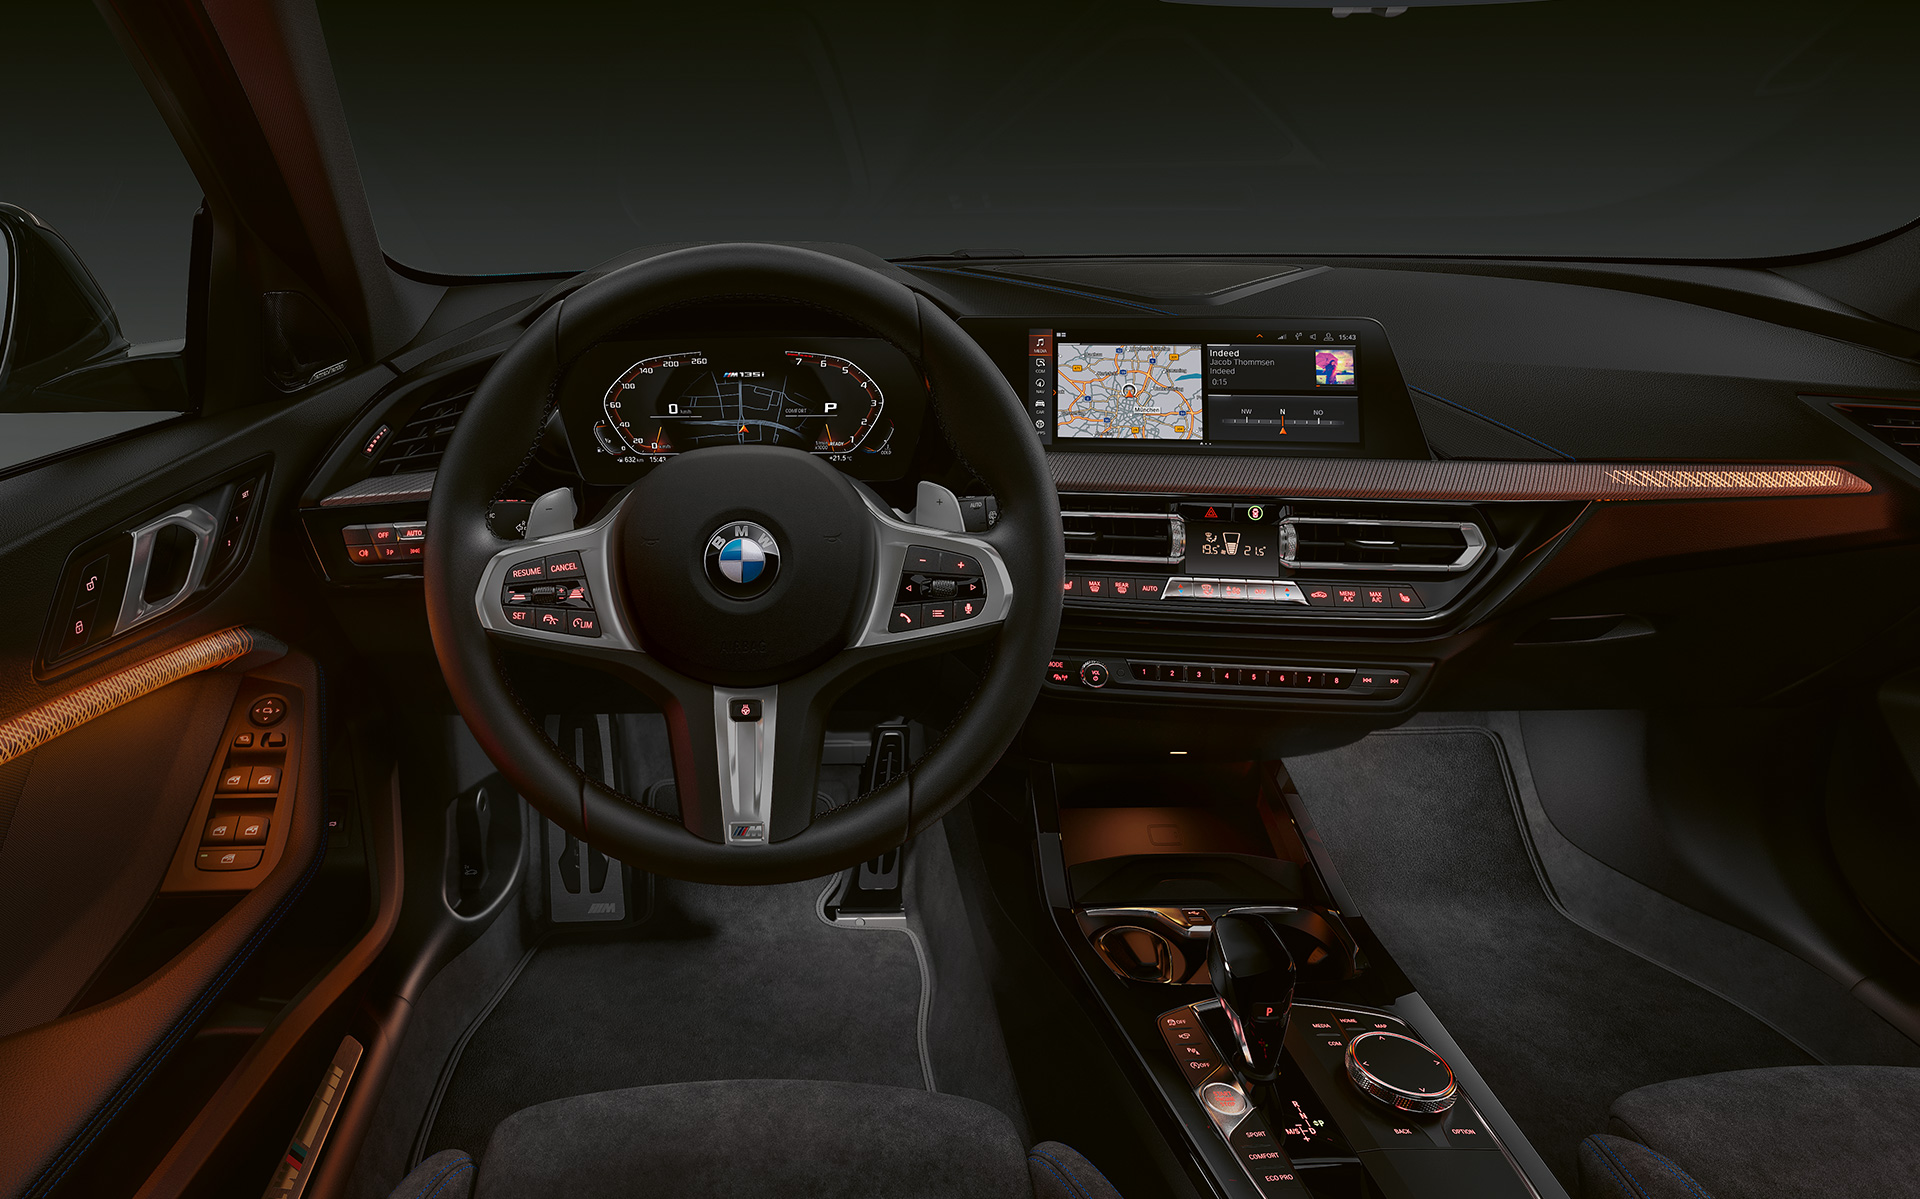 BMW M135i xDrive (F40) premium interior with illuminated interior trim finishers